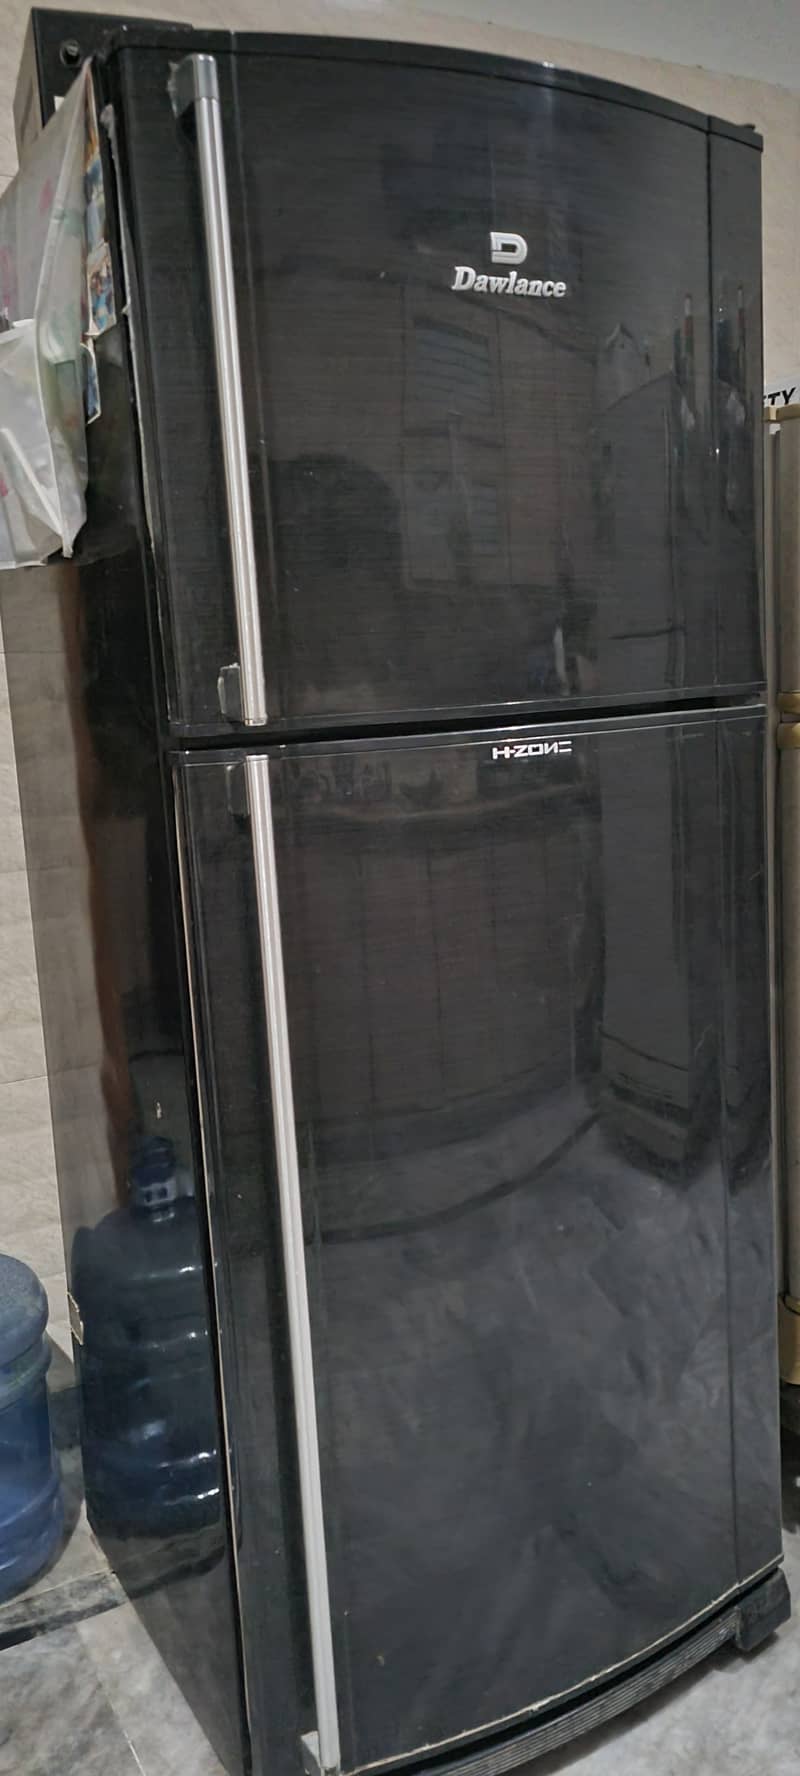 Dawlance HZONE Refrigerator for Sale 1